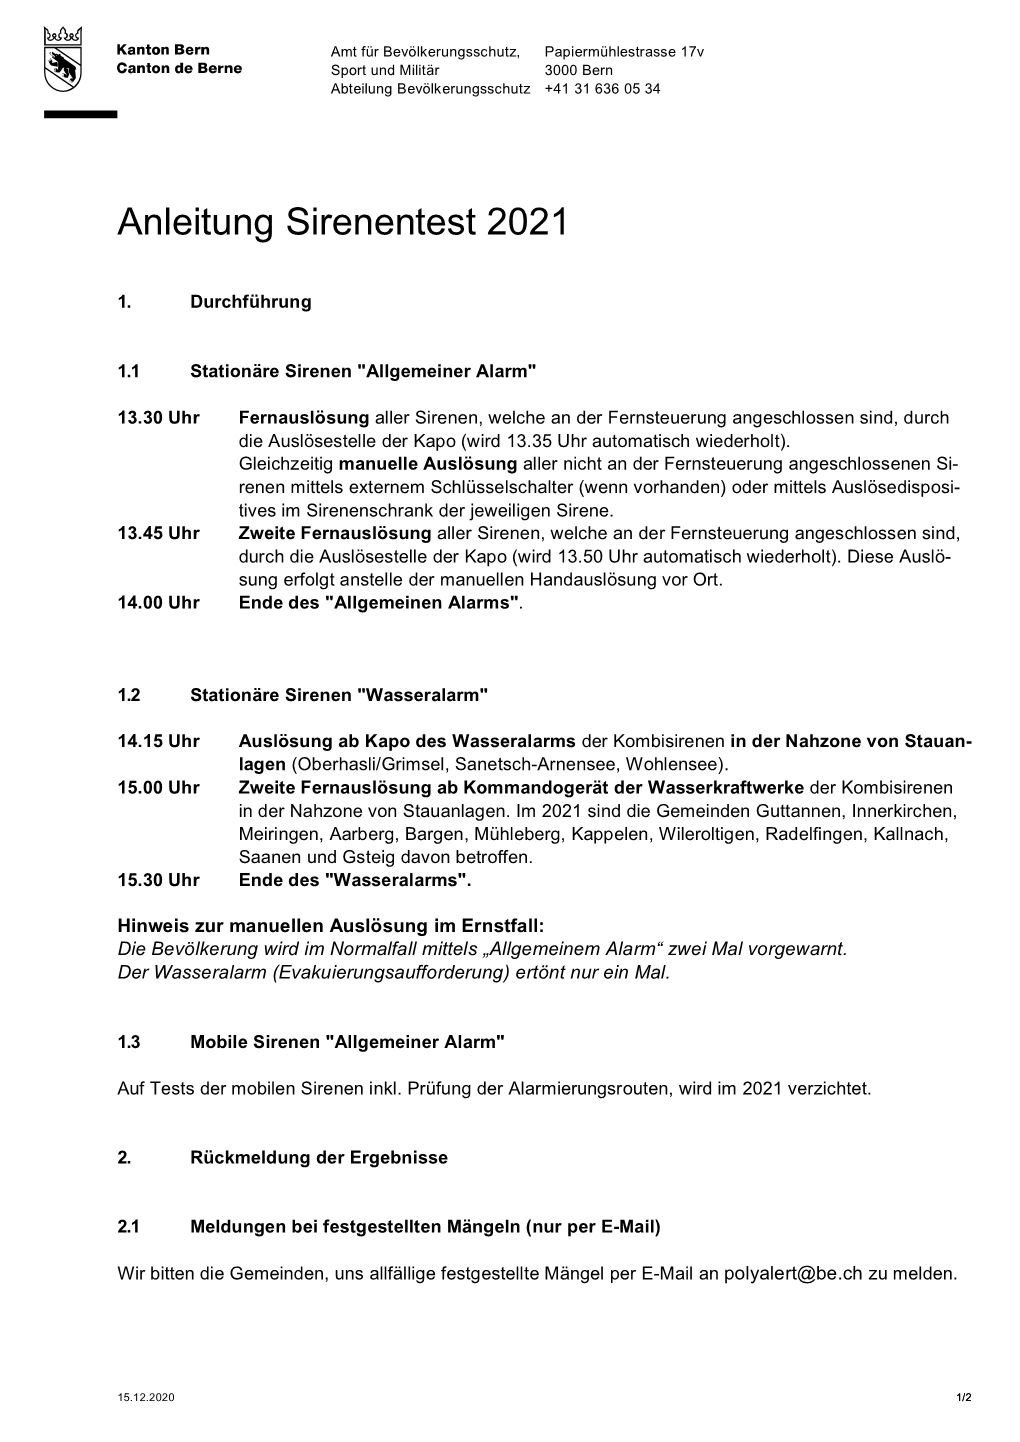 Anleitung Sirenentest 2021